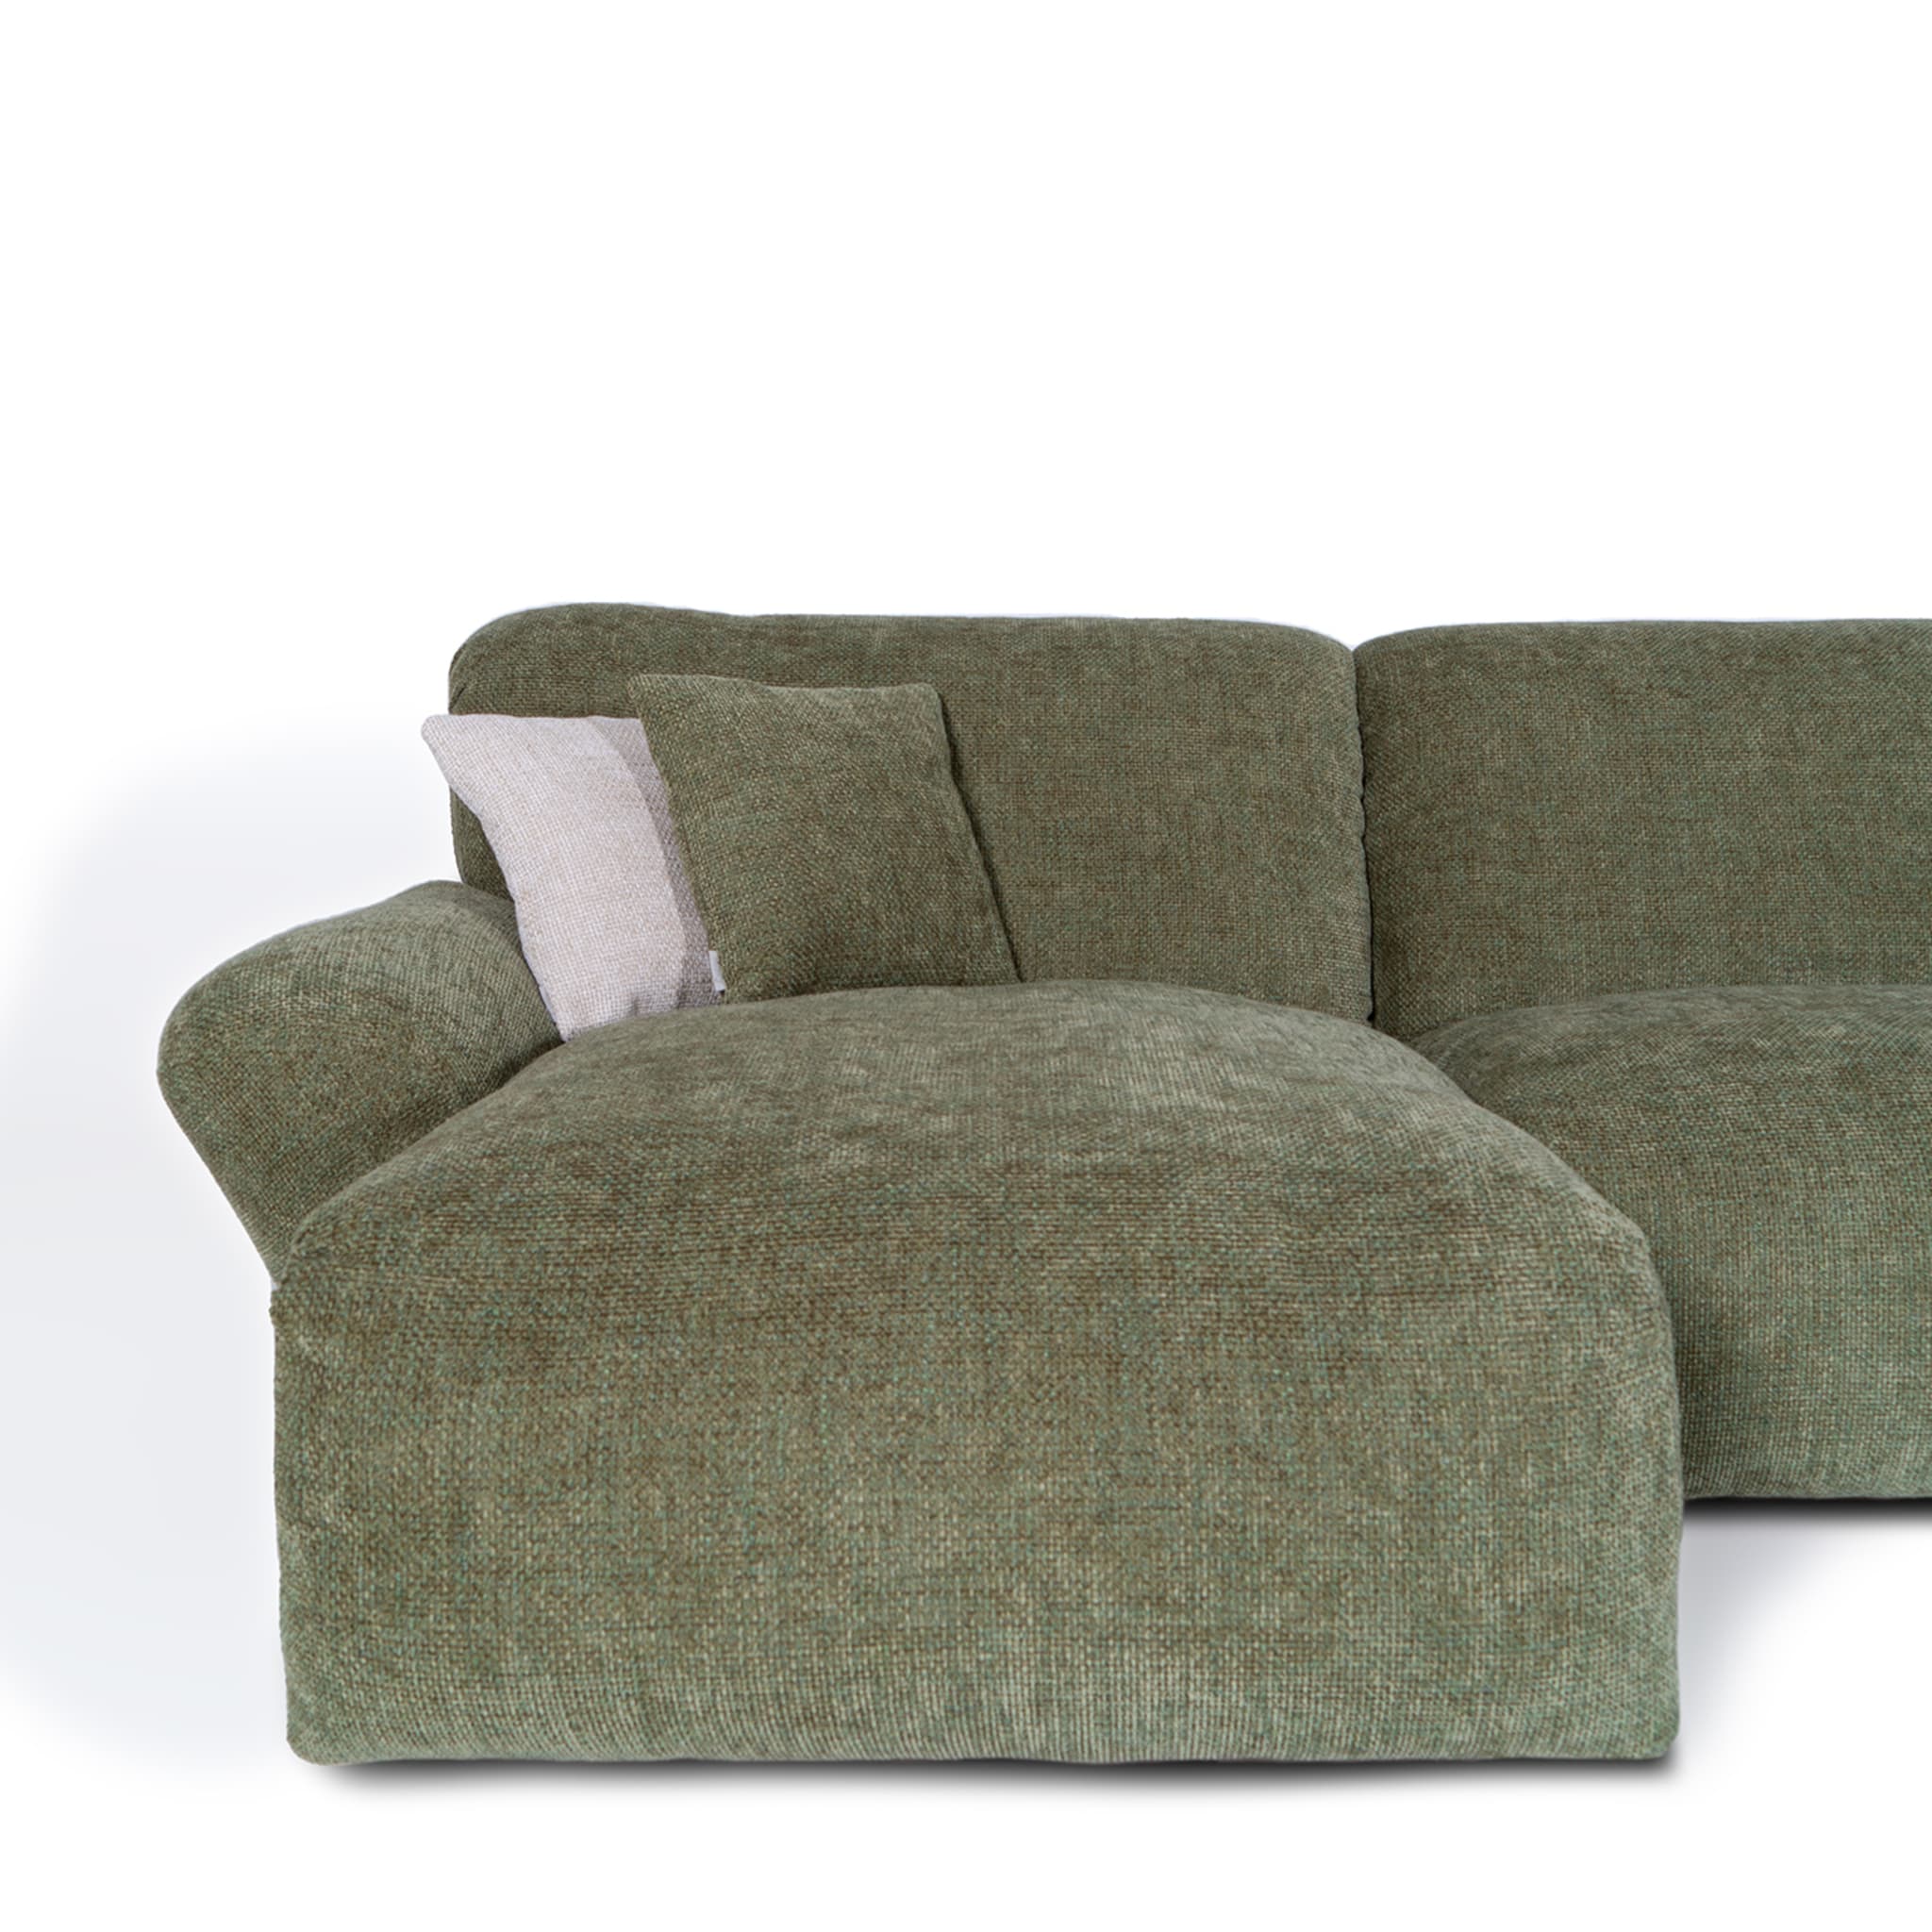 Beluga Green 3-Seater Sofa by Marco & Giulio Mantellassi - Alternative view 2